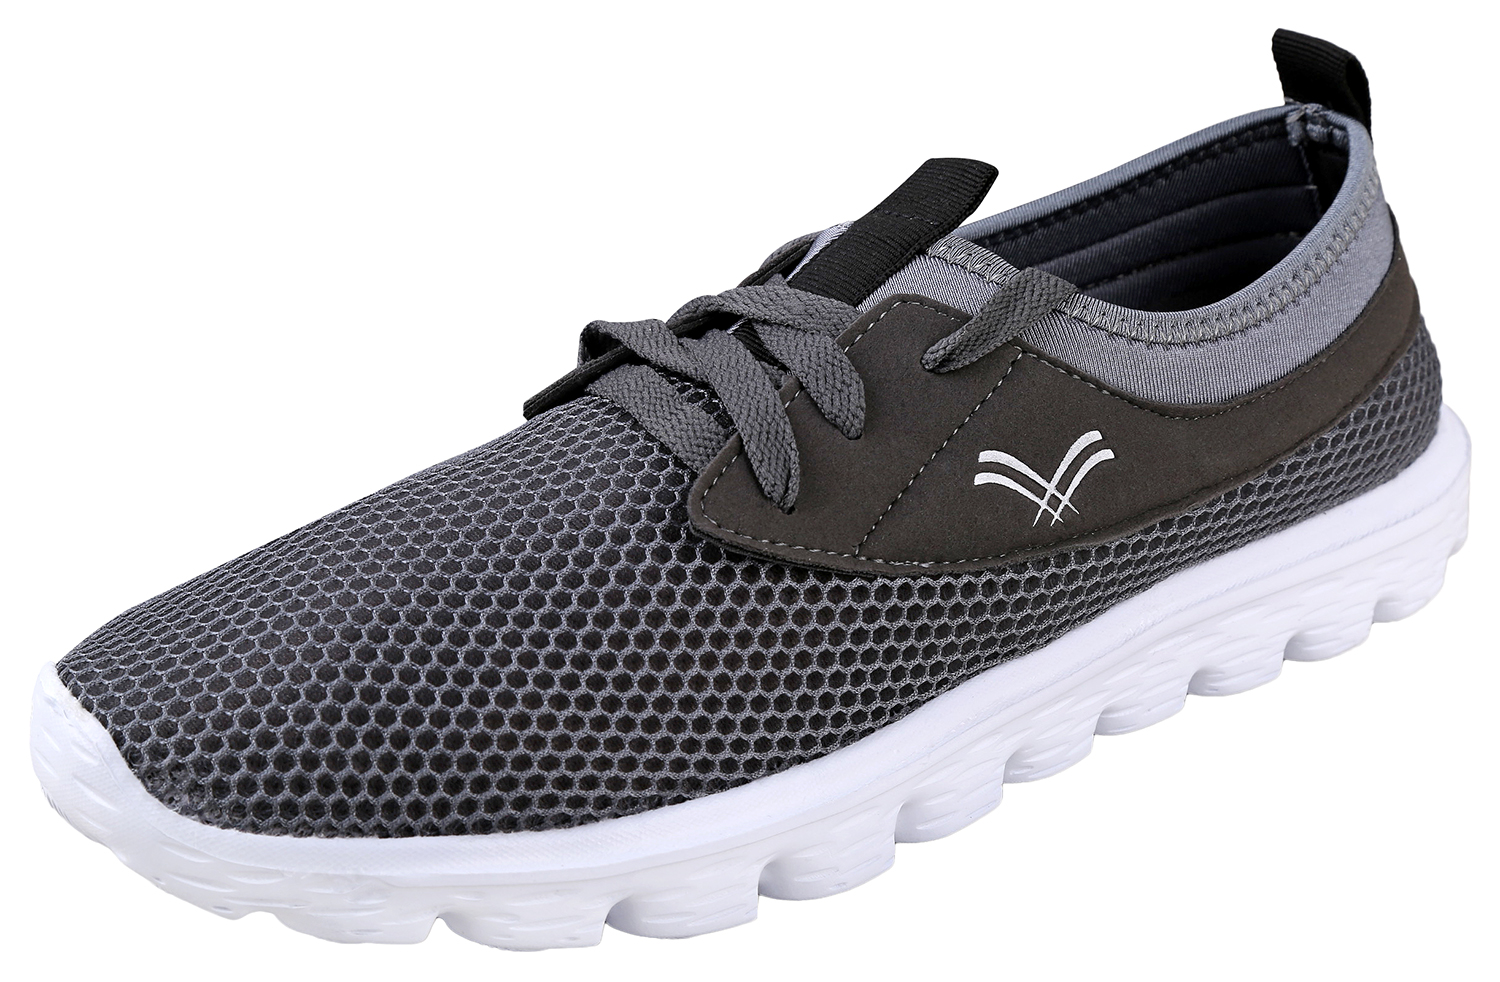 Urban Fox Men's Breeze Lightweight Shoes | Lightweight Shoes for Men | Casual Shoes | Walking Shoes for Men | Grey/White 8 M US - image 1 of 7